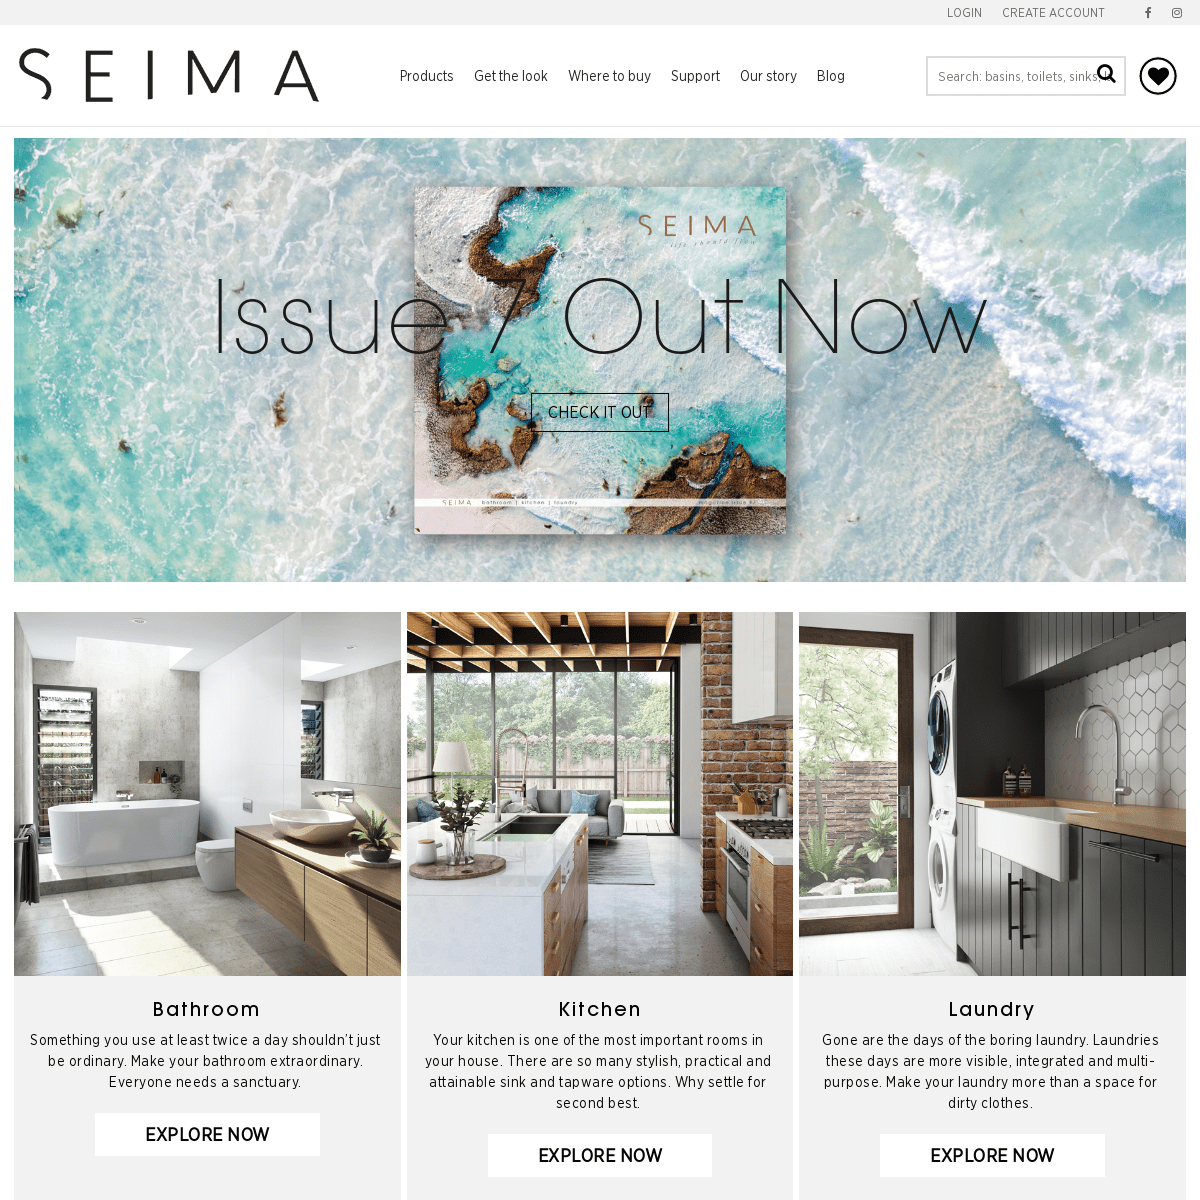 A complete backup of seima.com.au